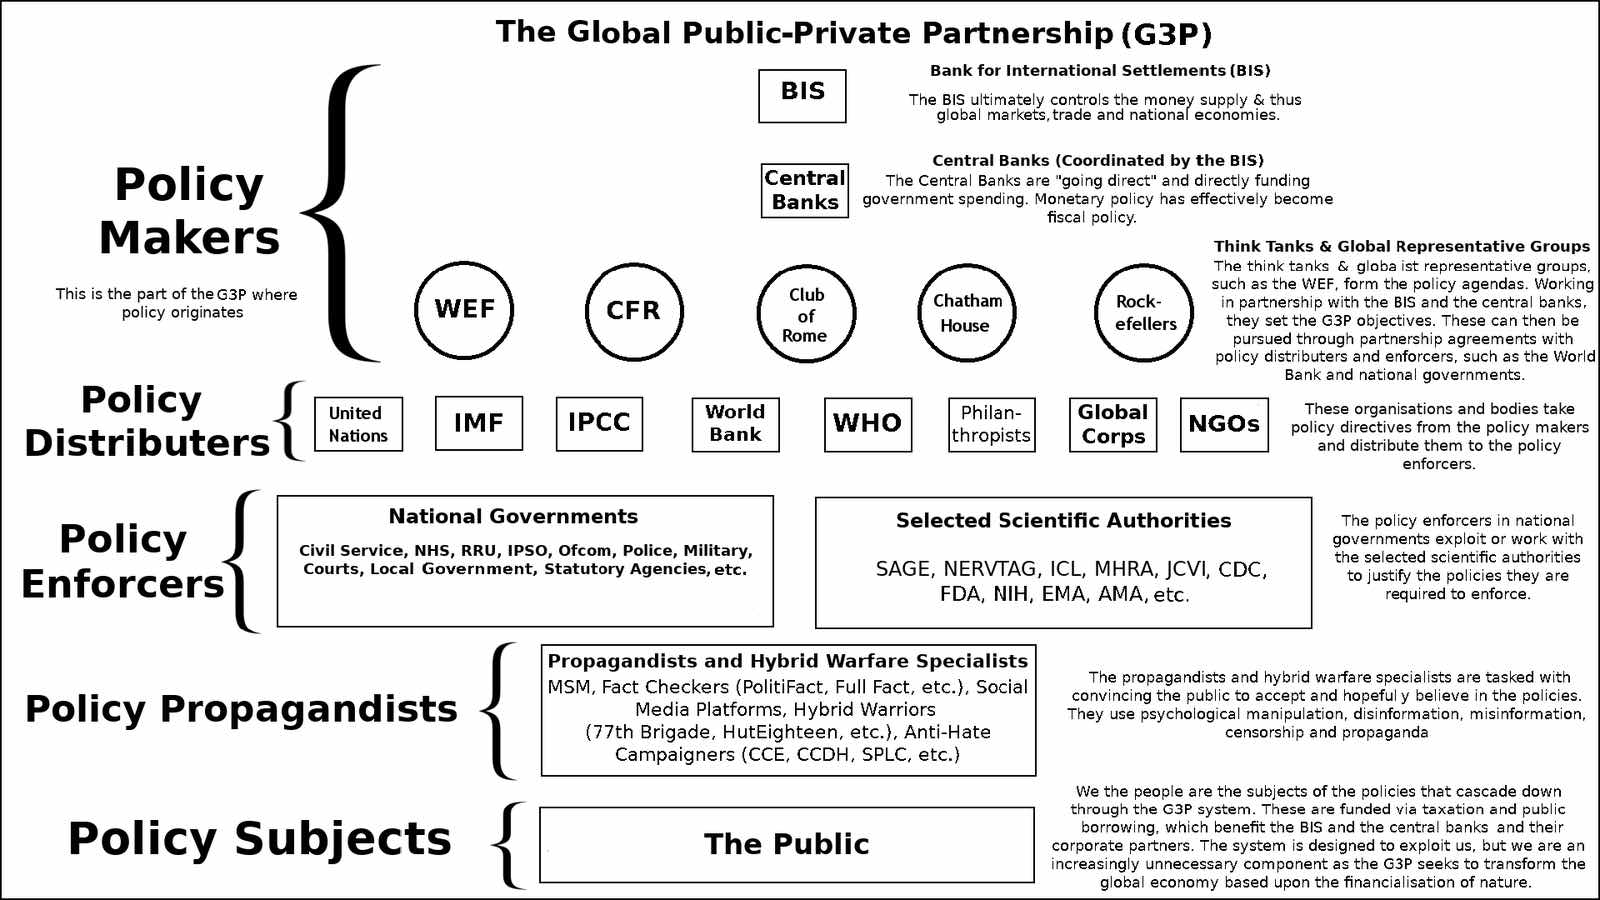 Global public-private partnership (Iain Davis)